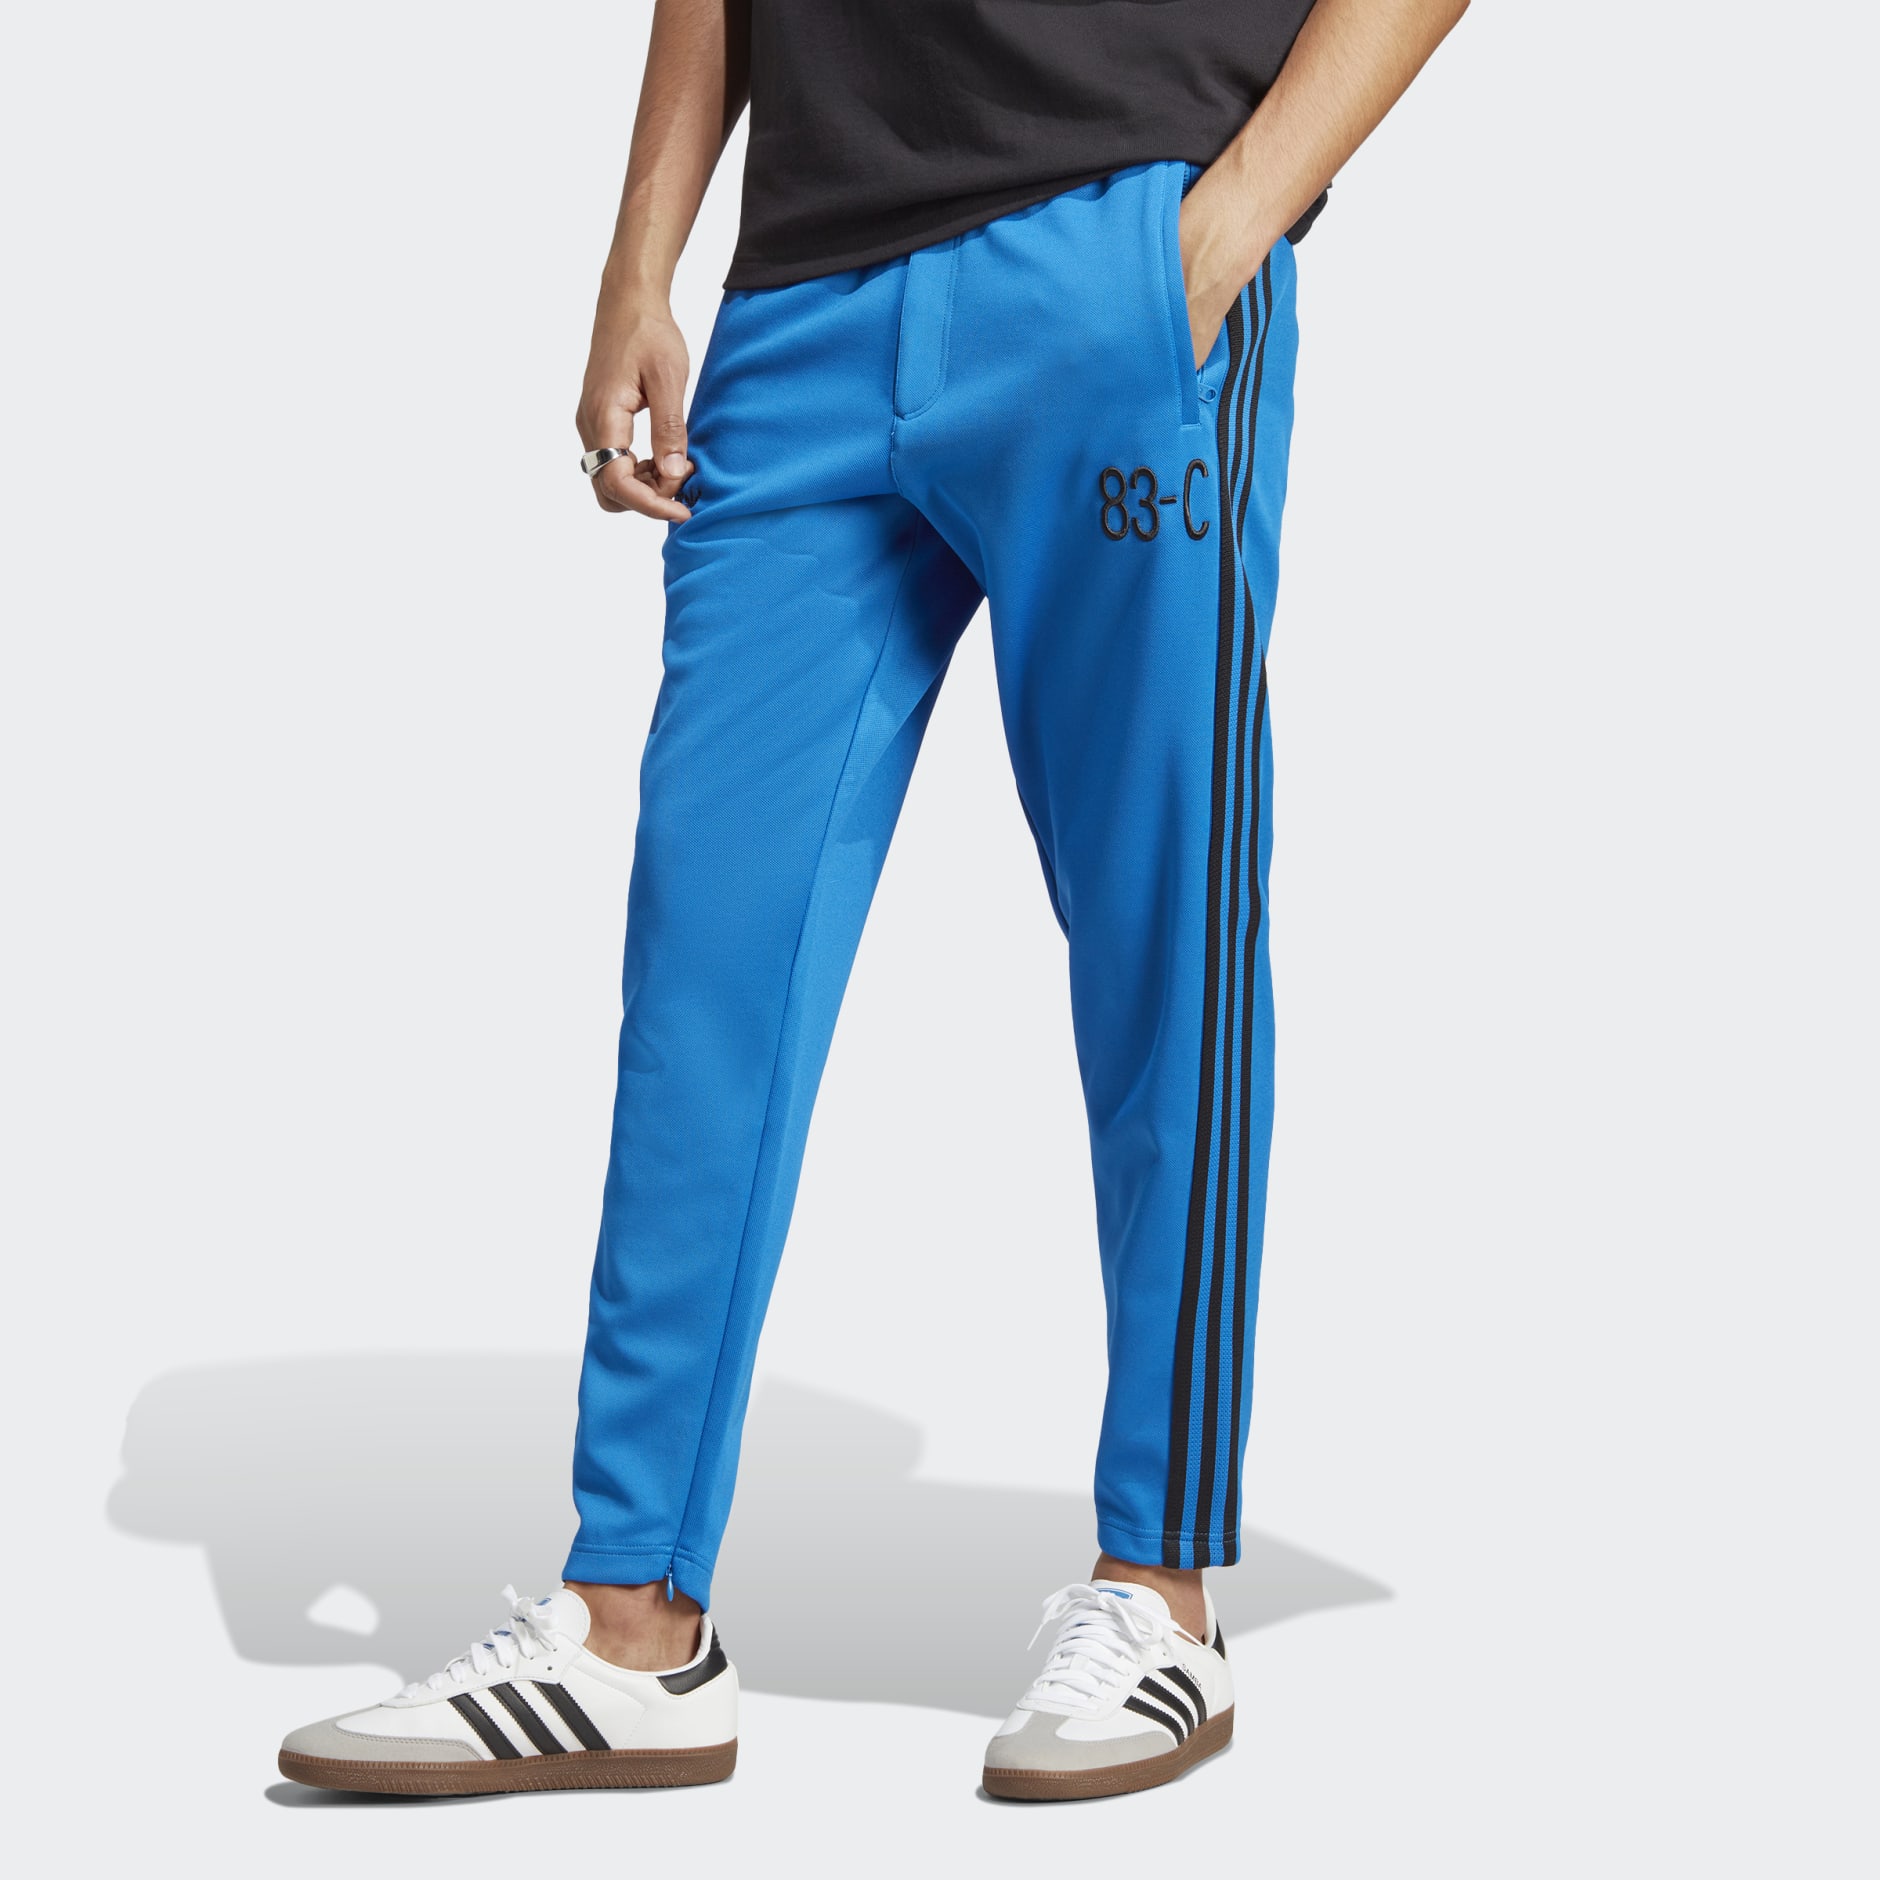 Men's Clothing - 83-C Track Pants - Blue | adidas Saudi Arabia